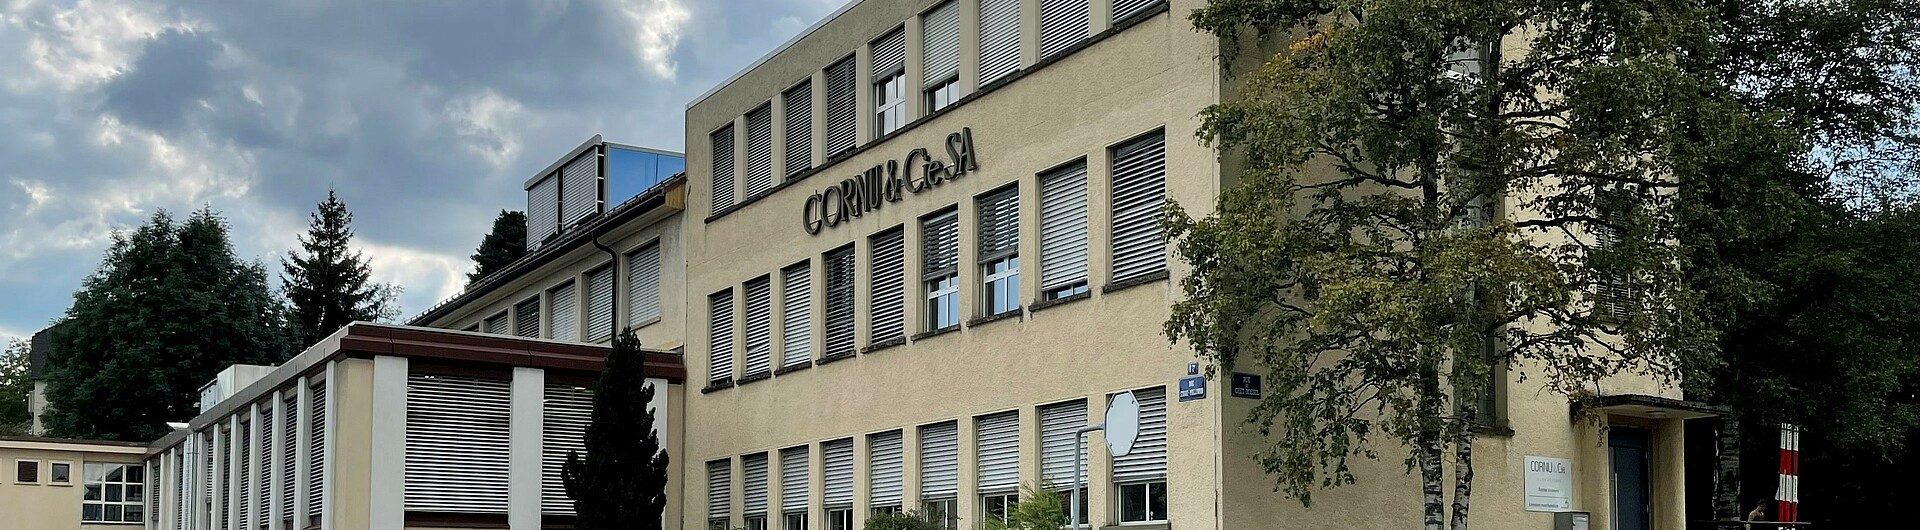 Building Cornu&Cie in La Chaux-de-Fonds 